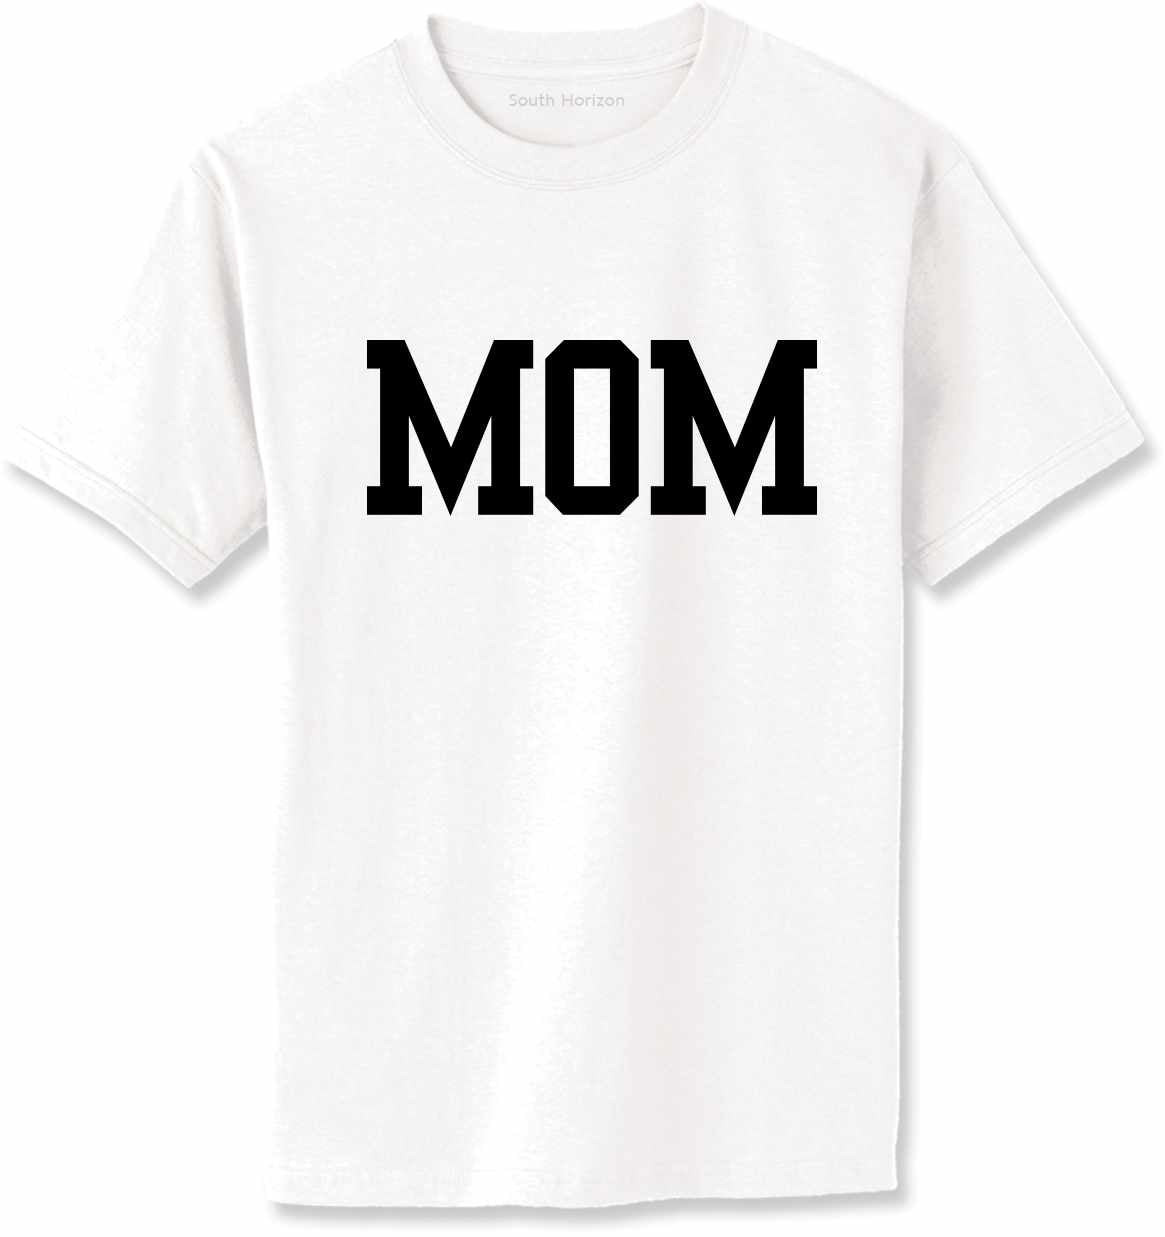 MOM Adult T-Shirt (#1067-1)